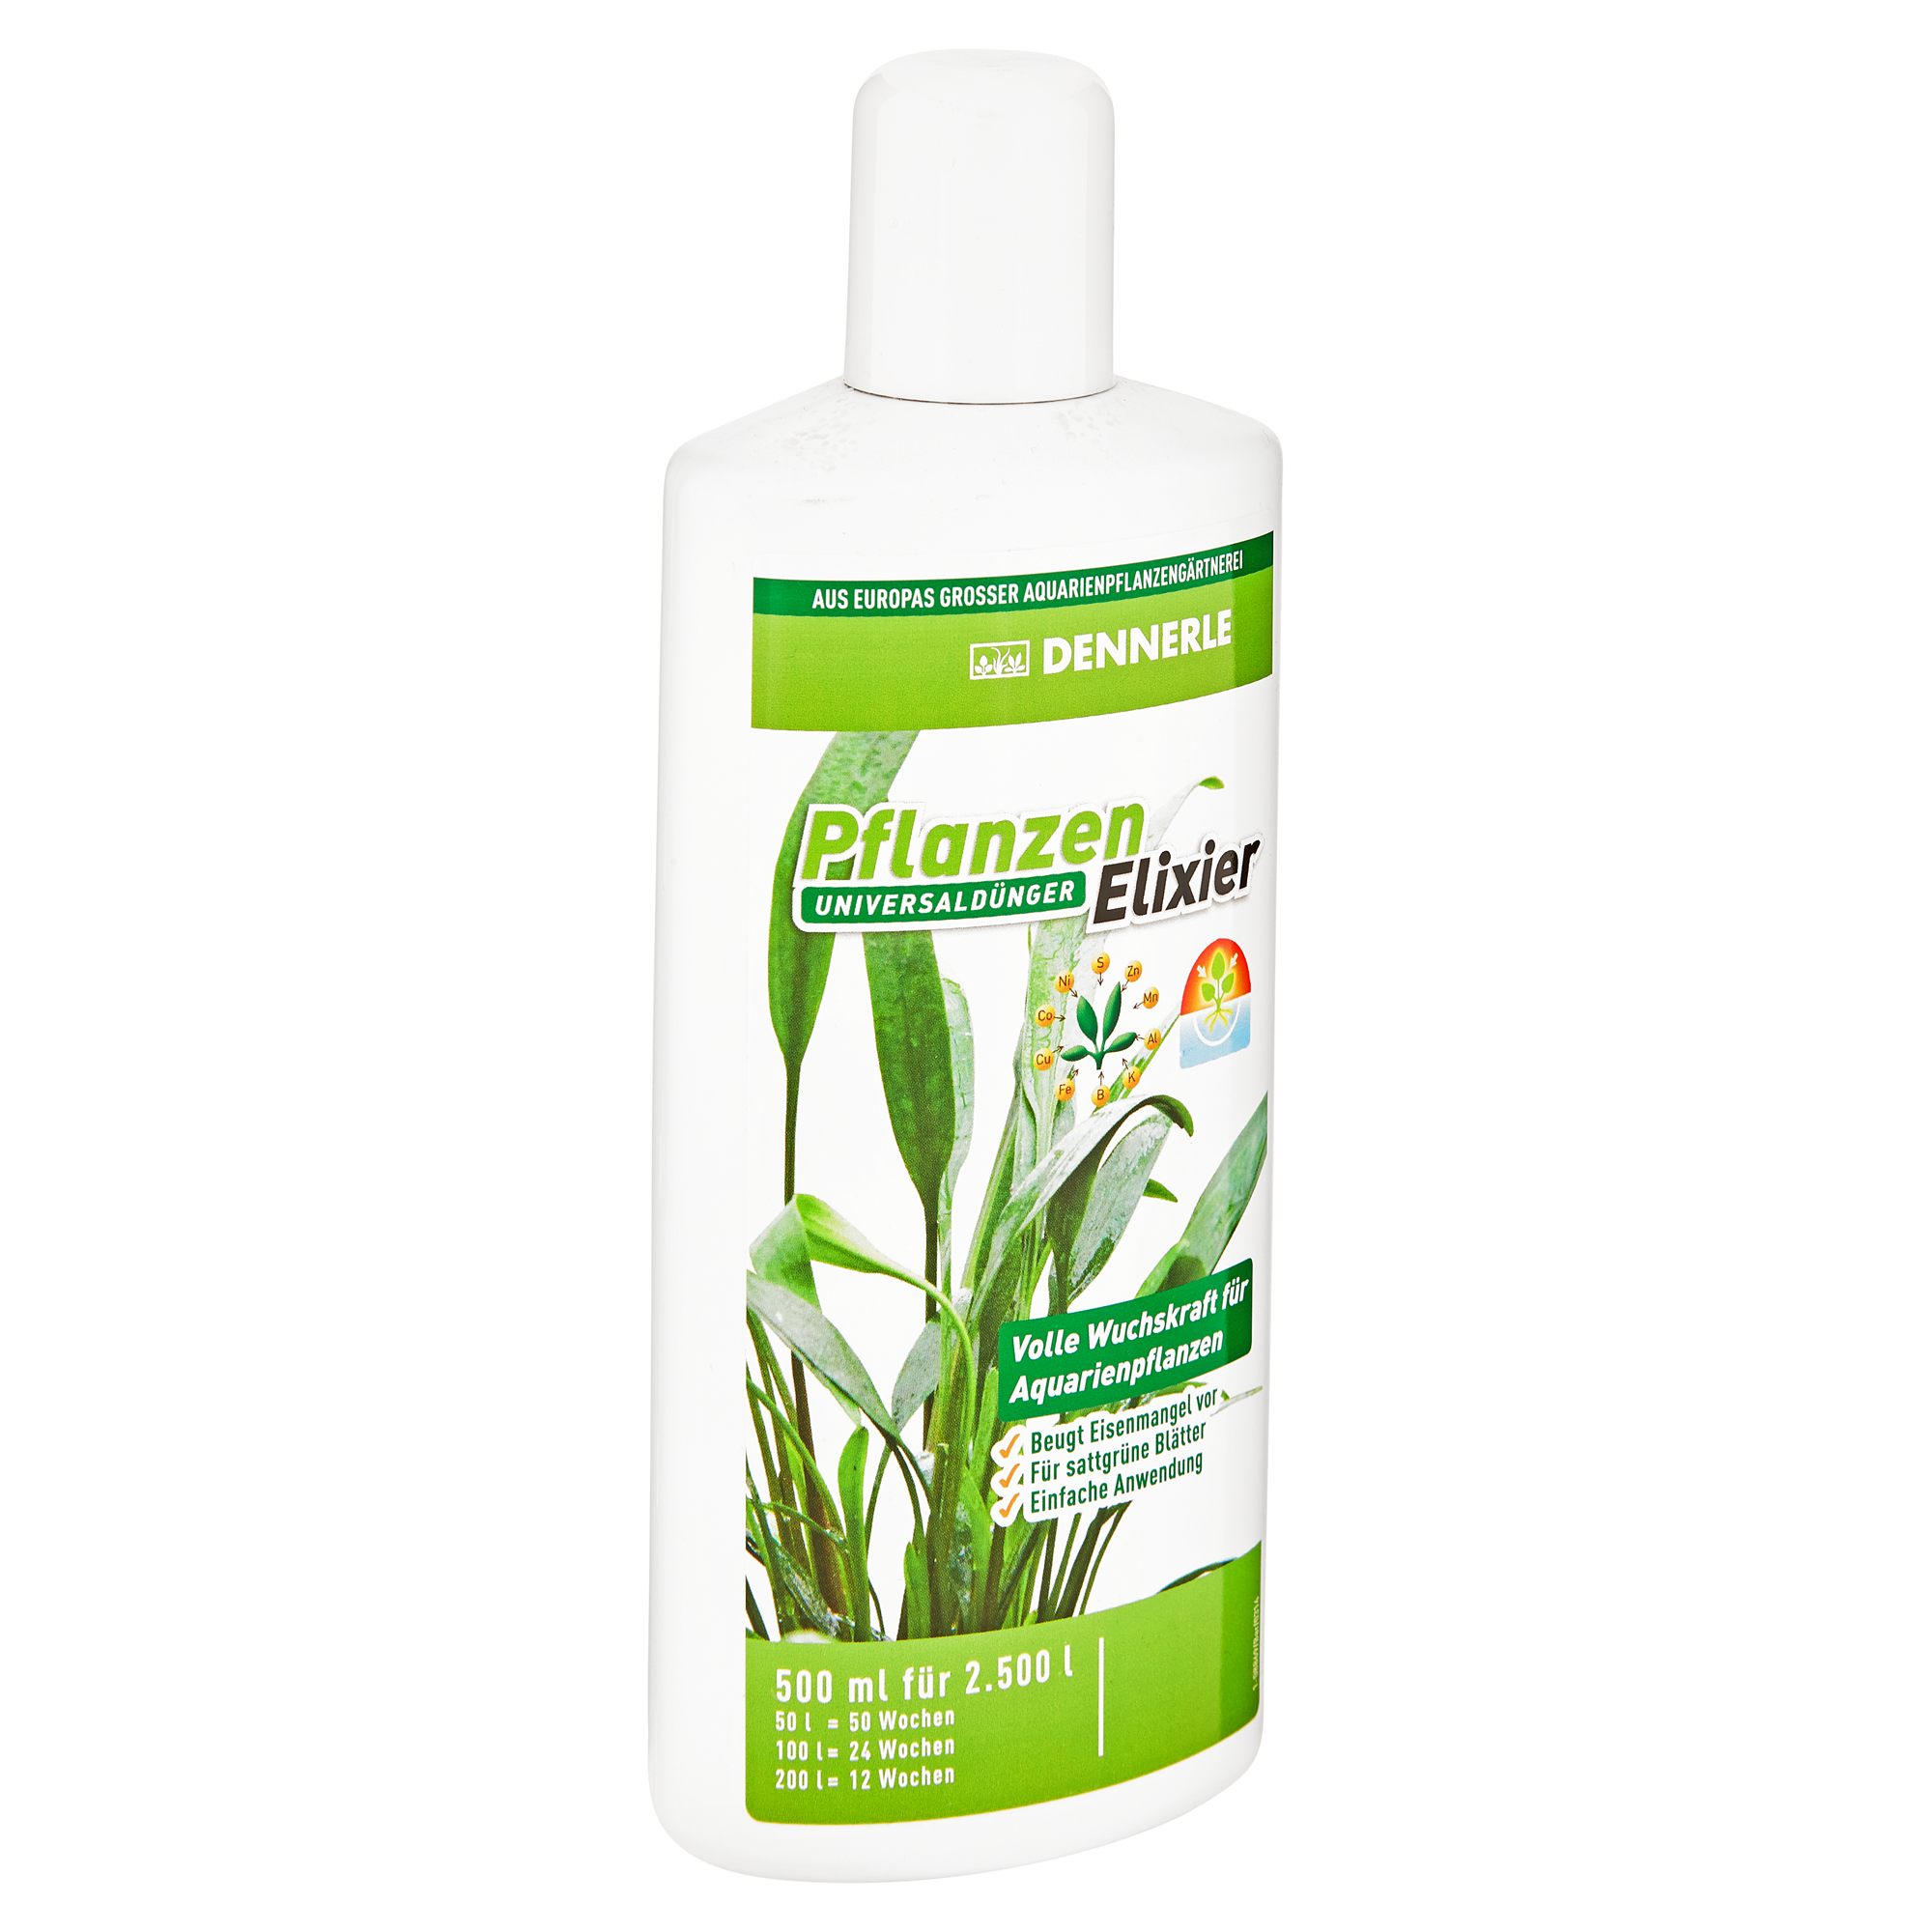 Universaldünger "PflanzenElixier" 500 ml + product picture